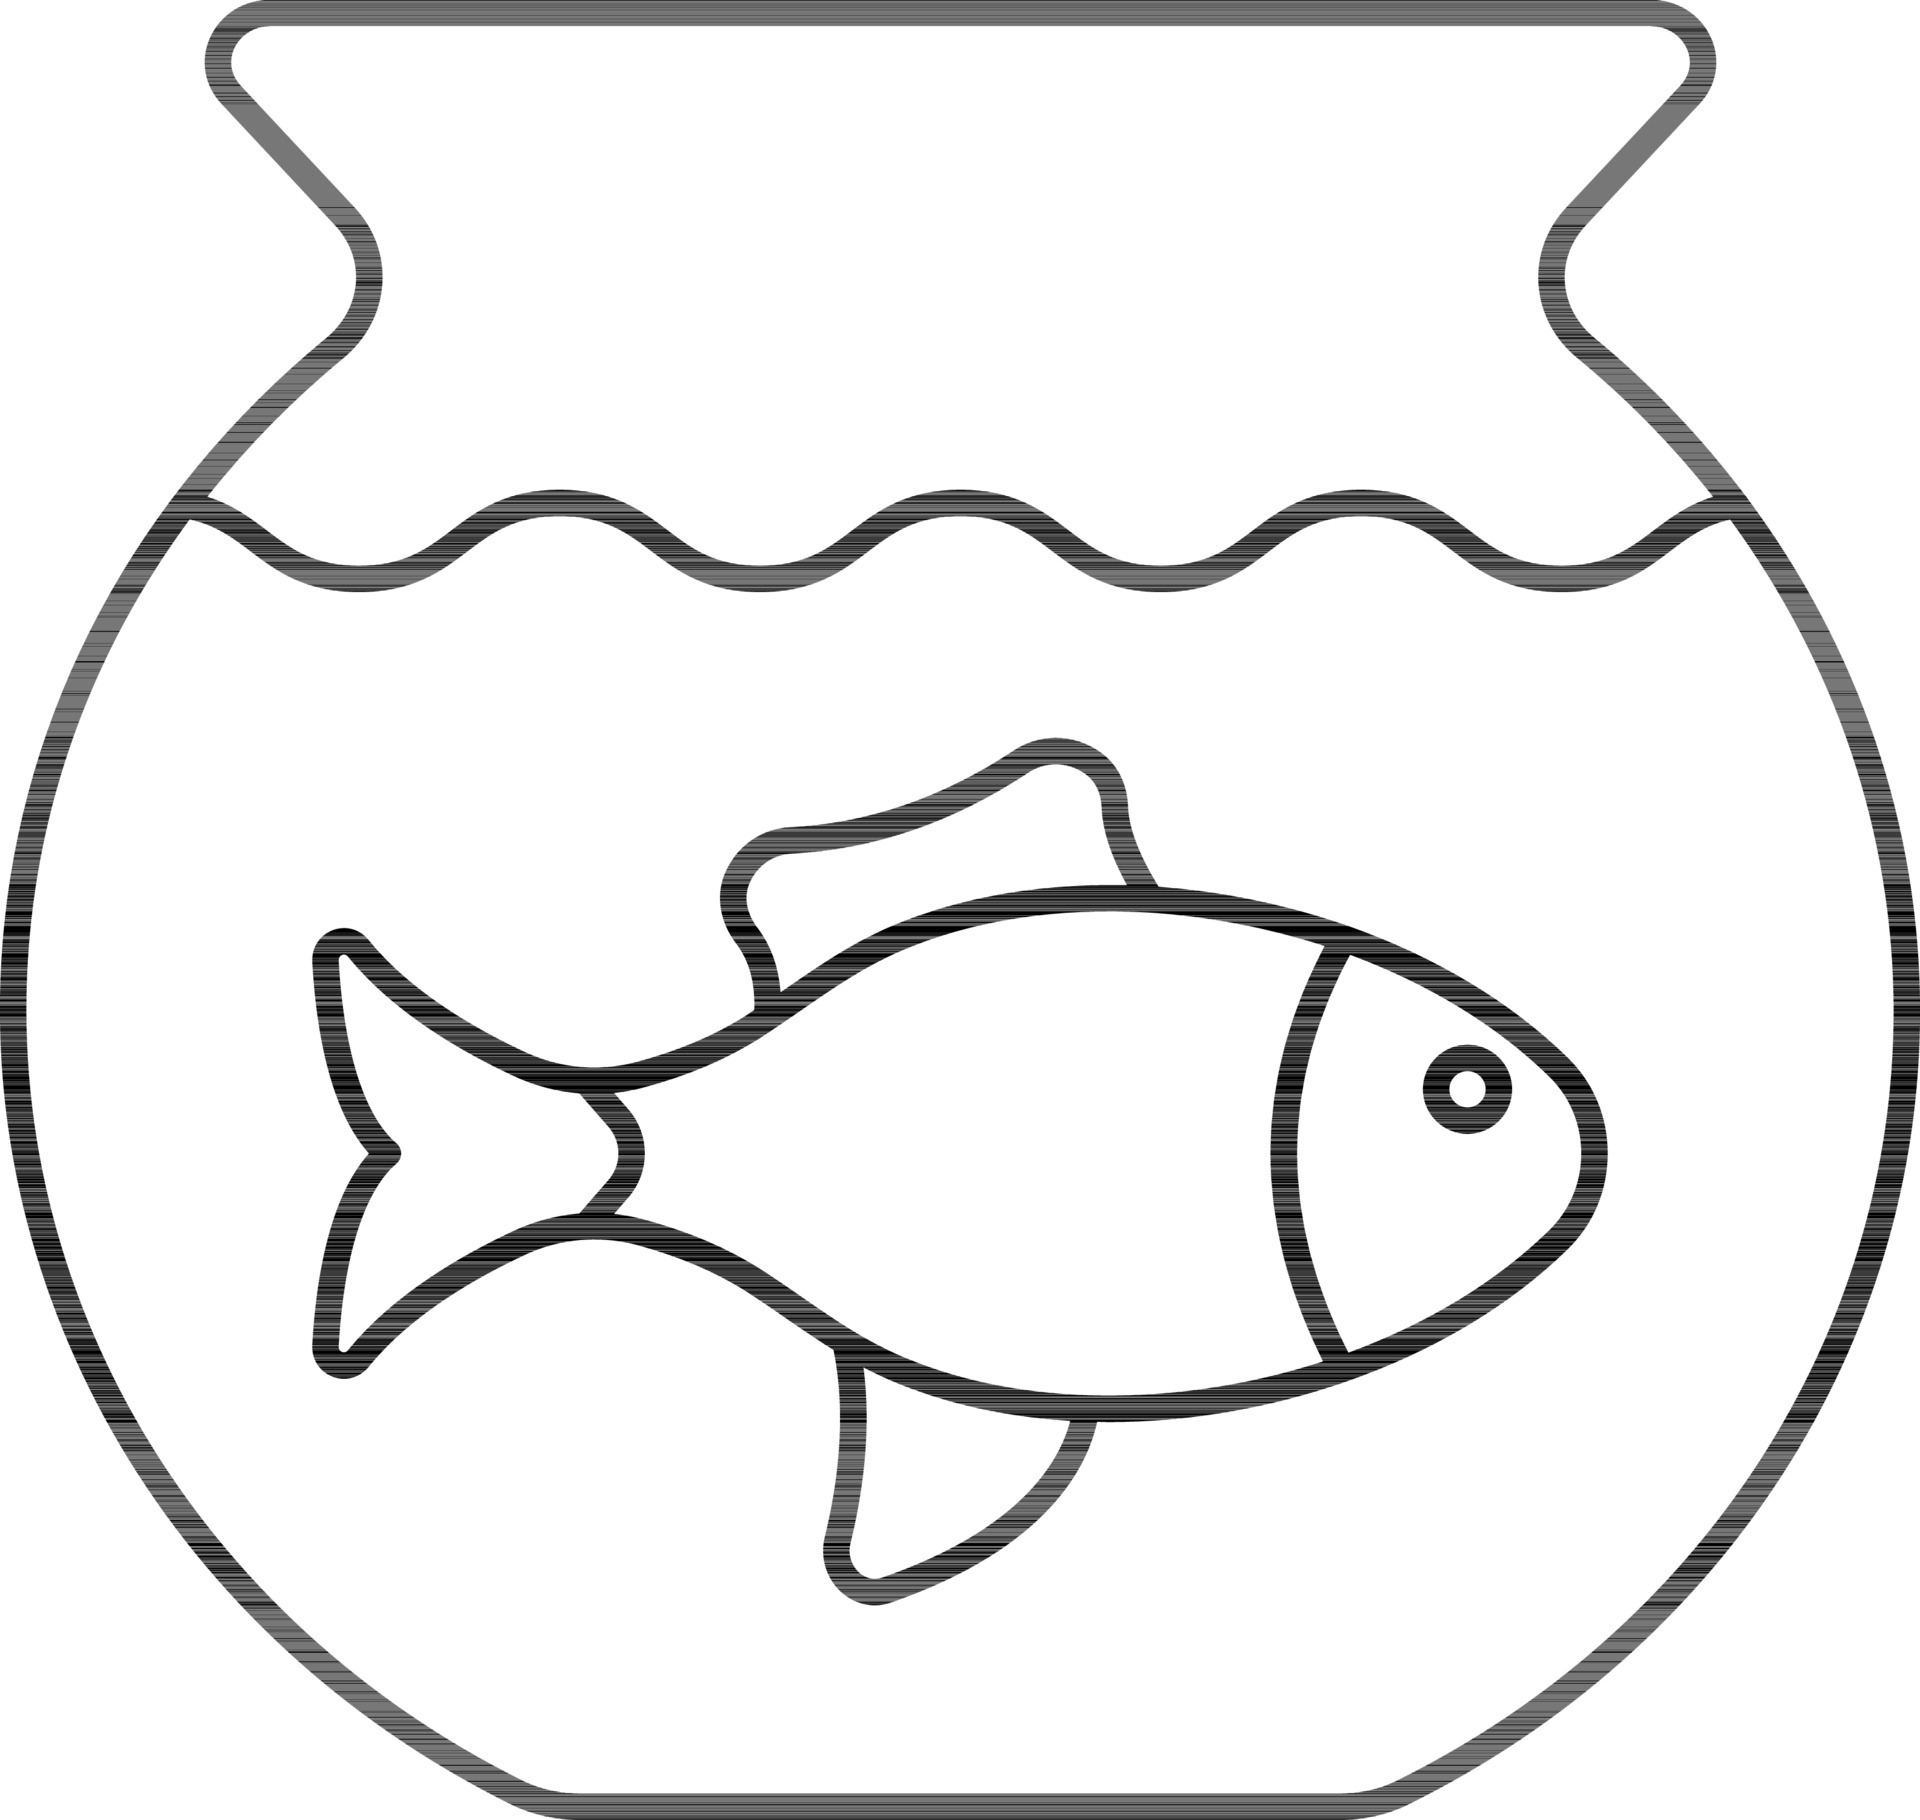 https://static.vecteezy.com/system/resources/previews/024/458/548/original/fish-bowl-icon-in-black-line-art-vector.jpg